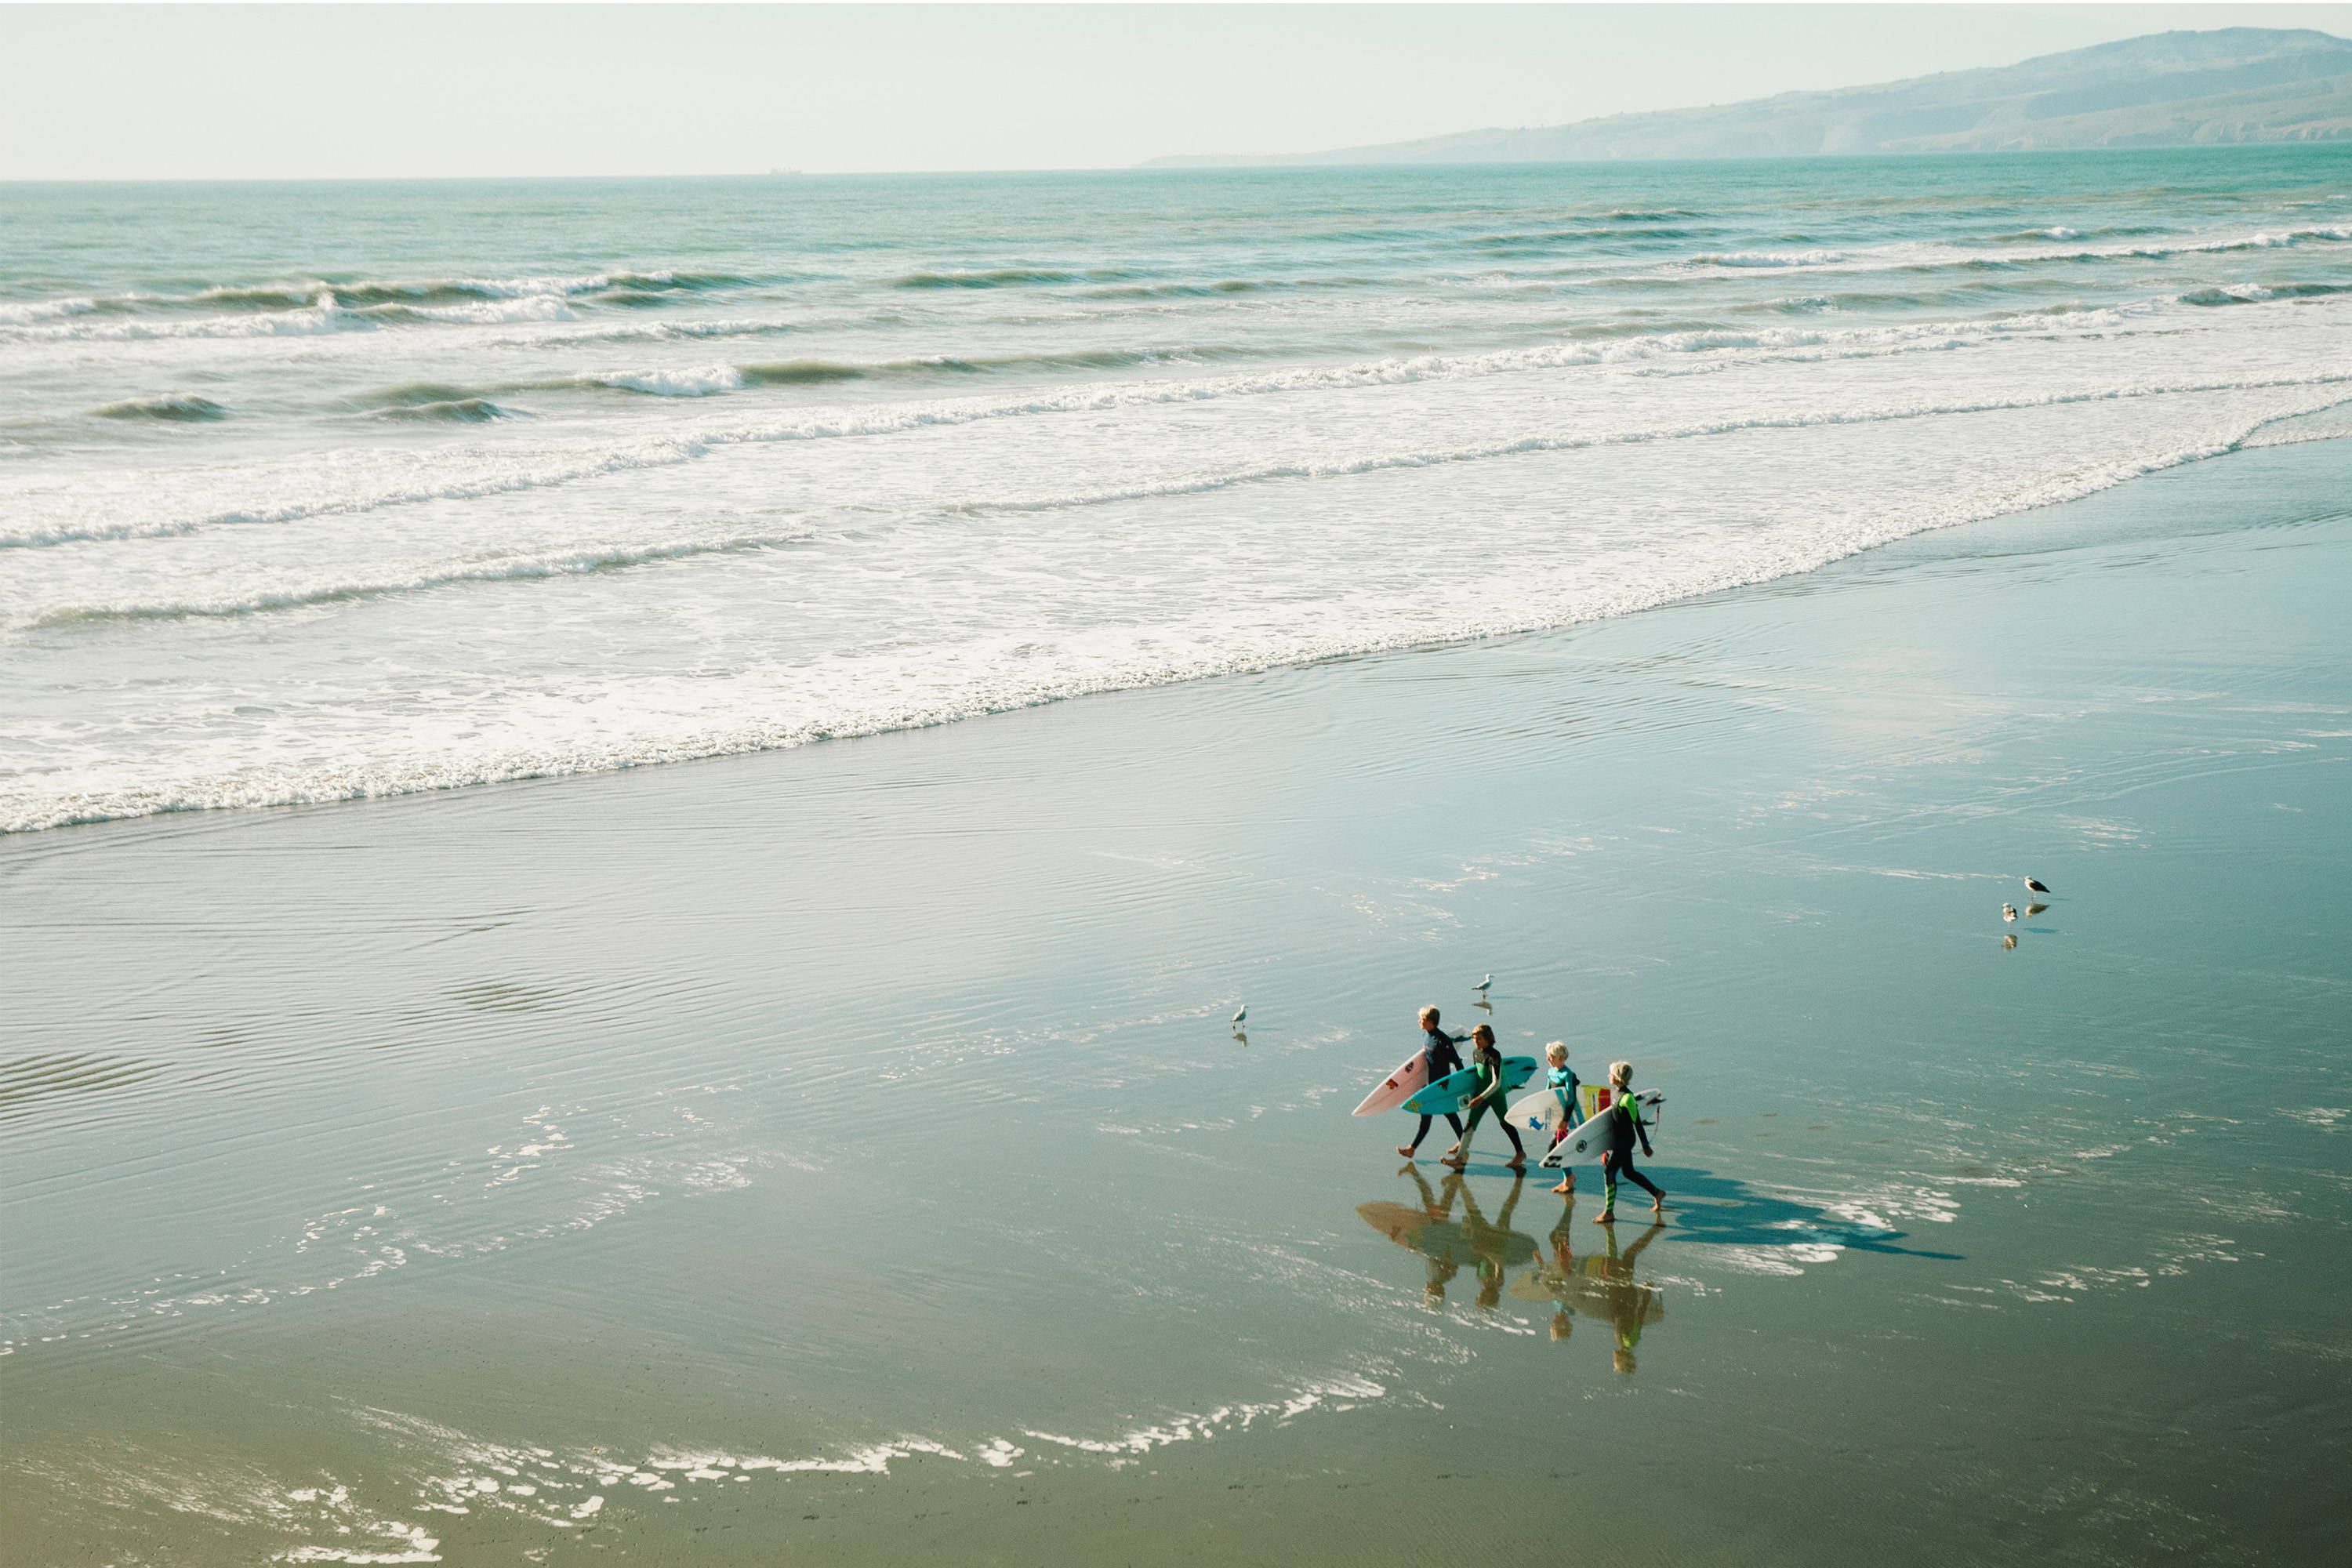 surfers walking on the beach